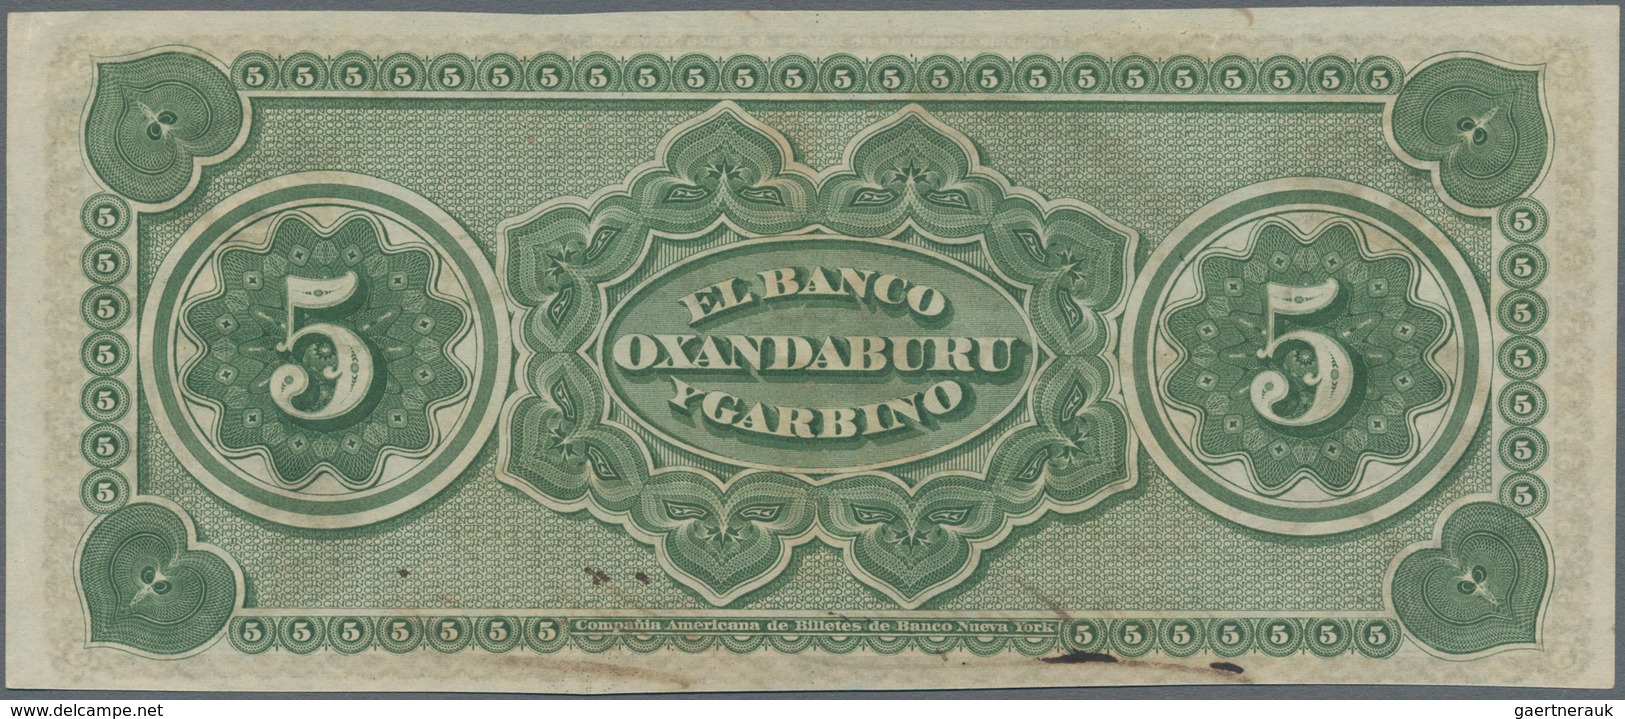 Argentina / Argentinien: Banco Oxandaburu Y Garbino 5 Pesos Fuertes 1869 With Red Overprint "BANCO D - Argentina